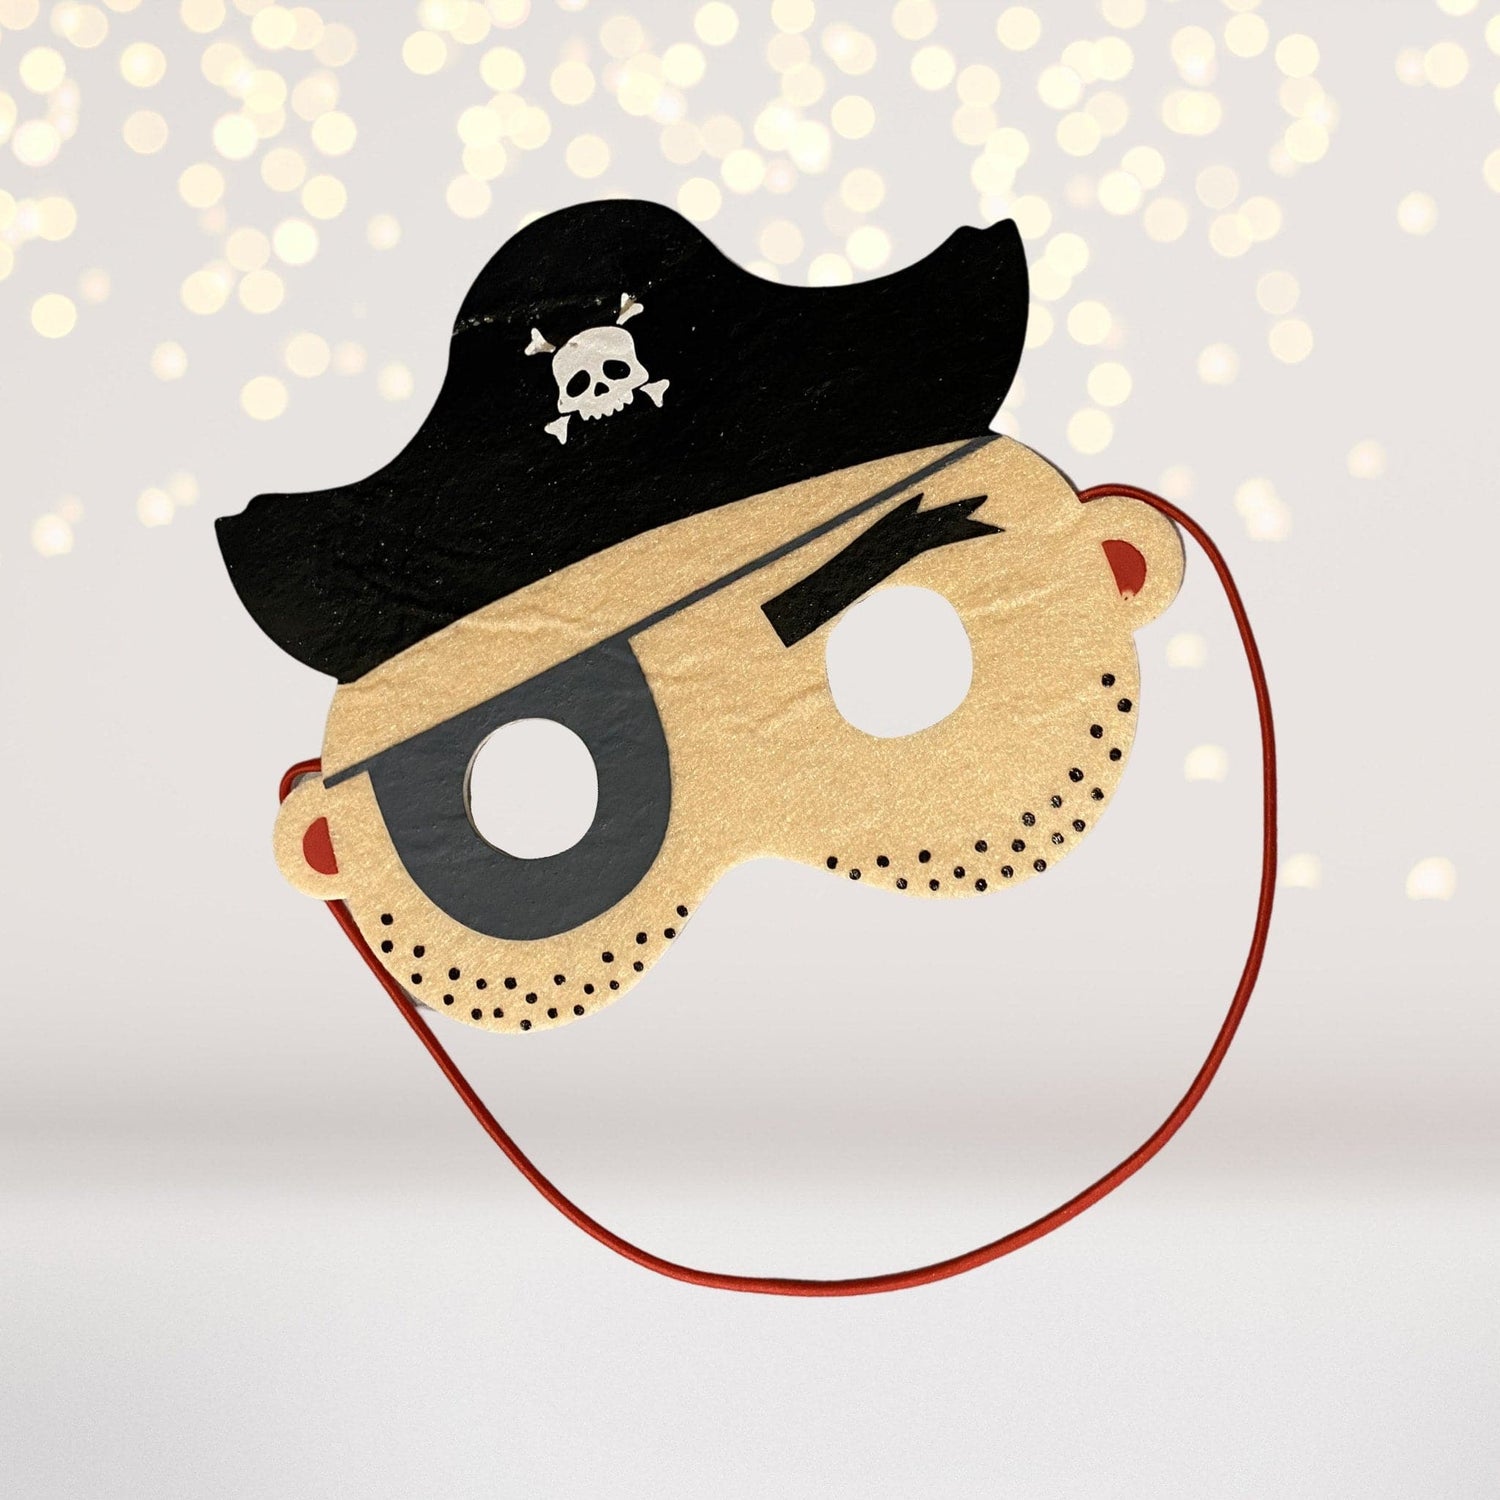 Mask - Pirate Mask, Felt Pirate Mask, Children's Pirate Captain Mask